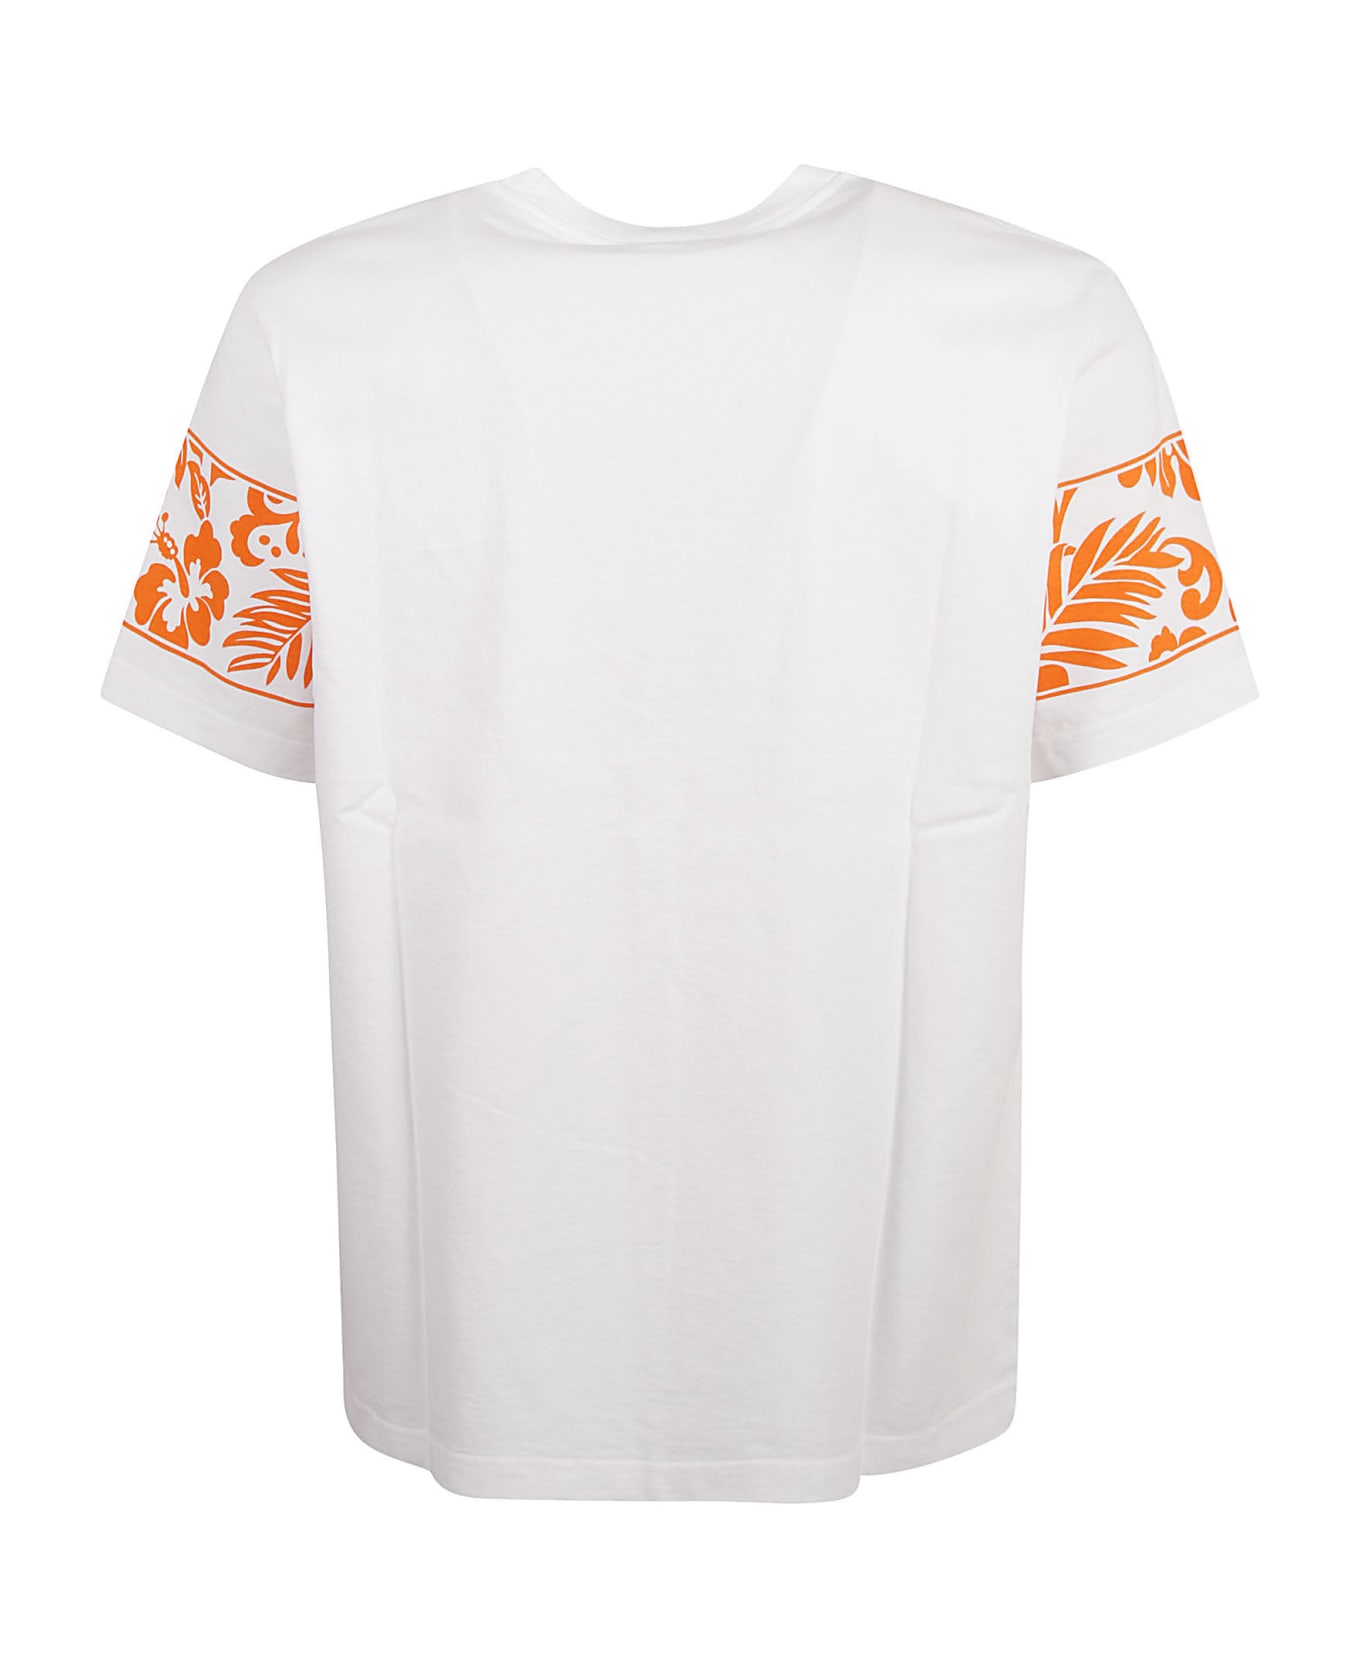 Maison Kitsuné Tropical Band T-shirt - White